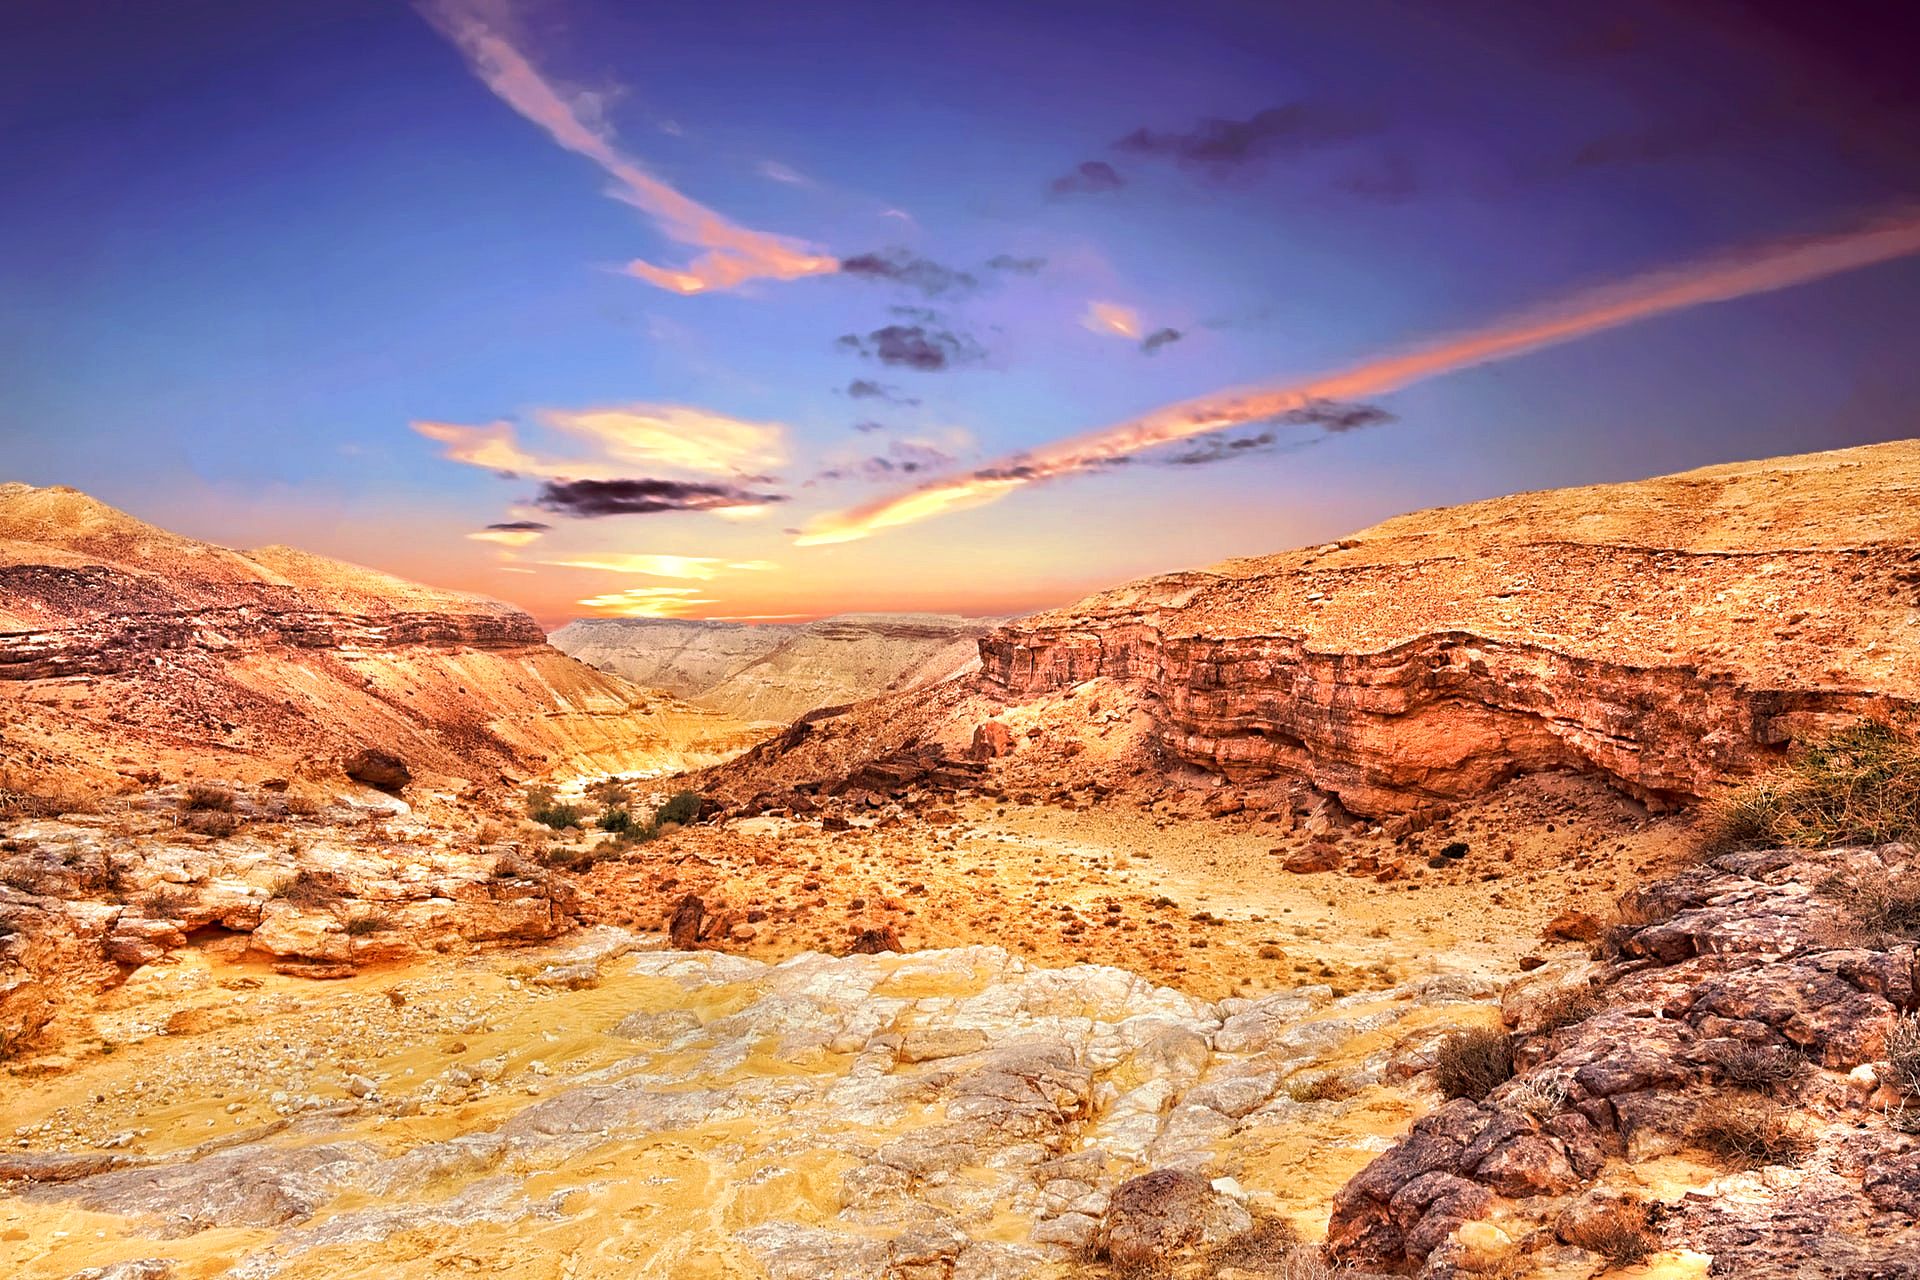 A sunset over Ein Yorkeam Wadi. The Negev Desert, Israel